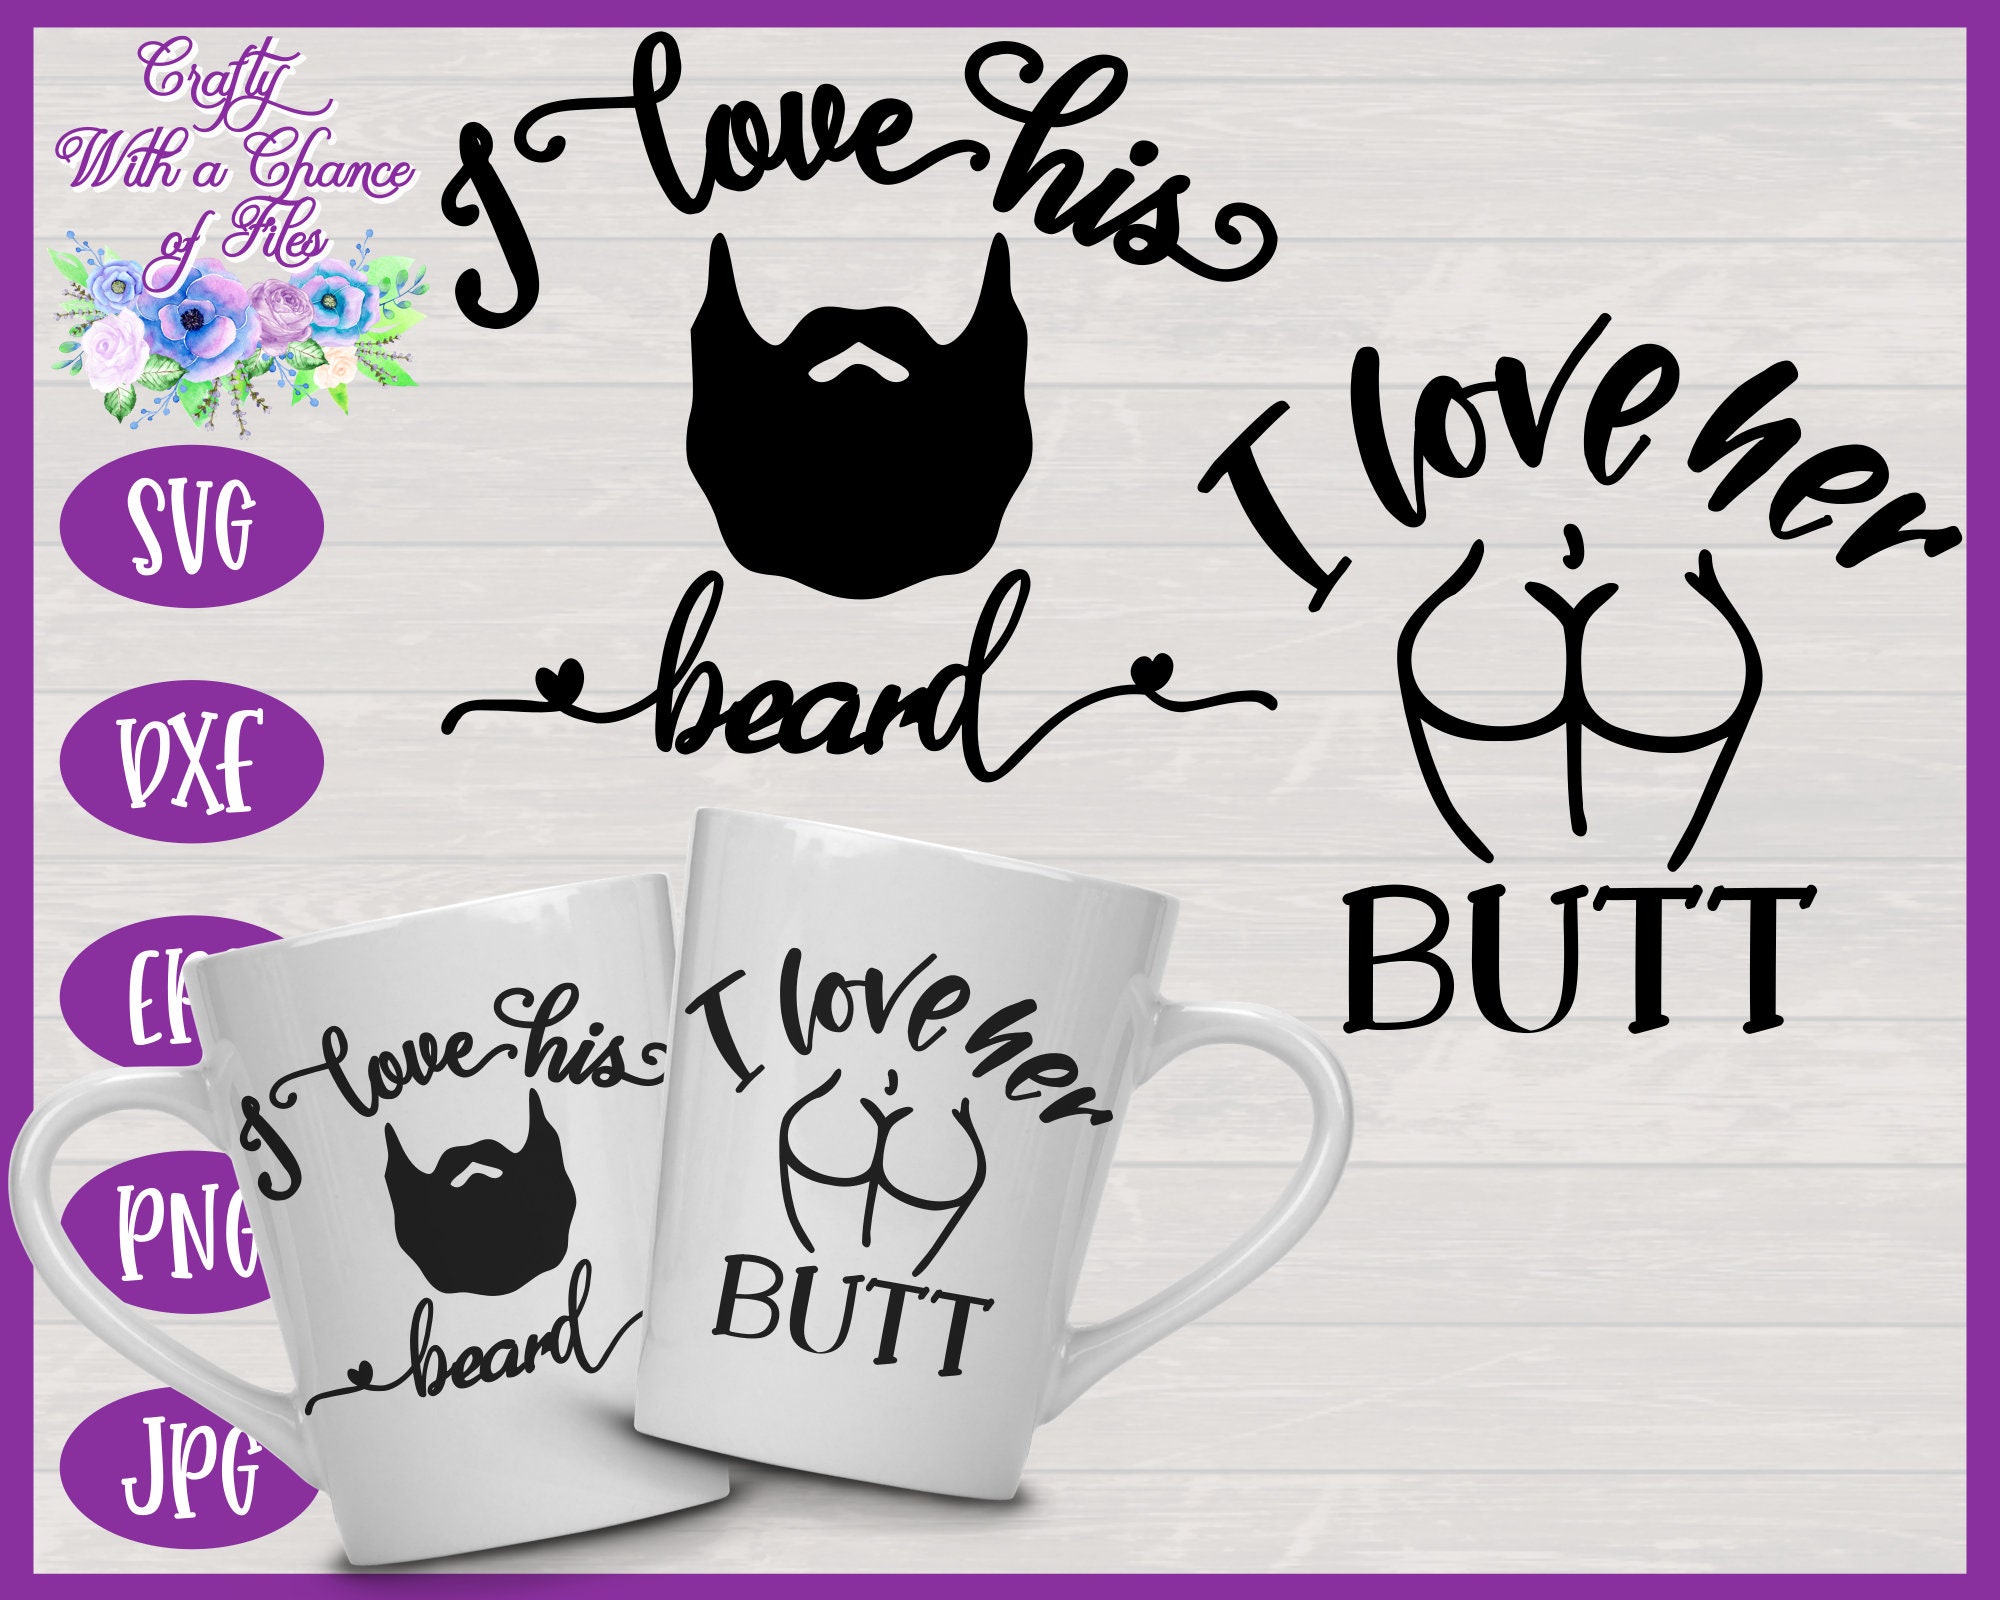 I Like Her Butt / His Beard - Funny Couple Mugs, His and Hers Coffee Mug Set